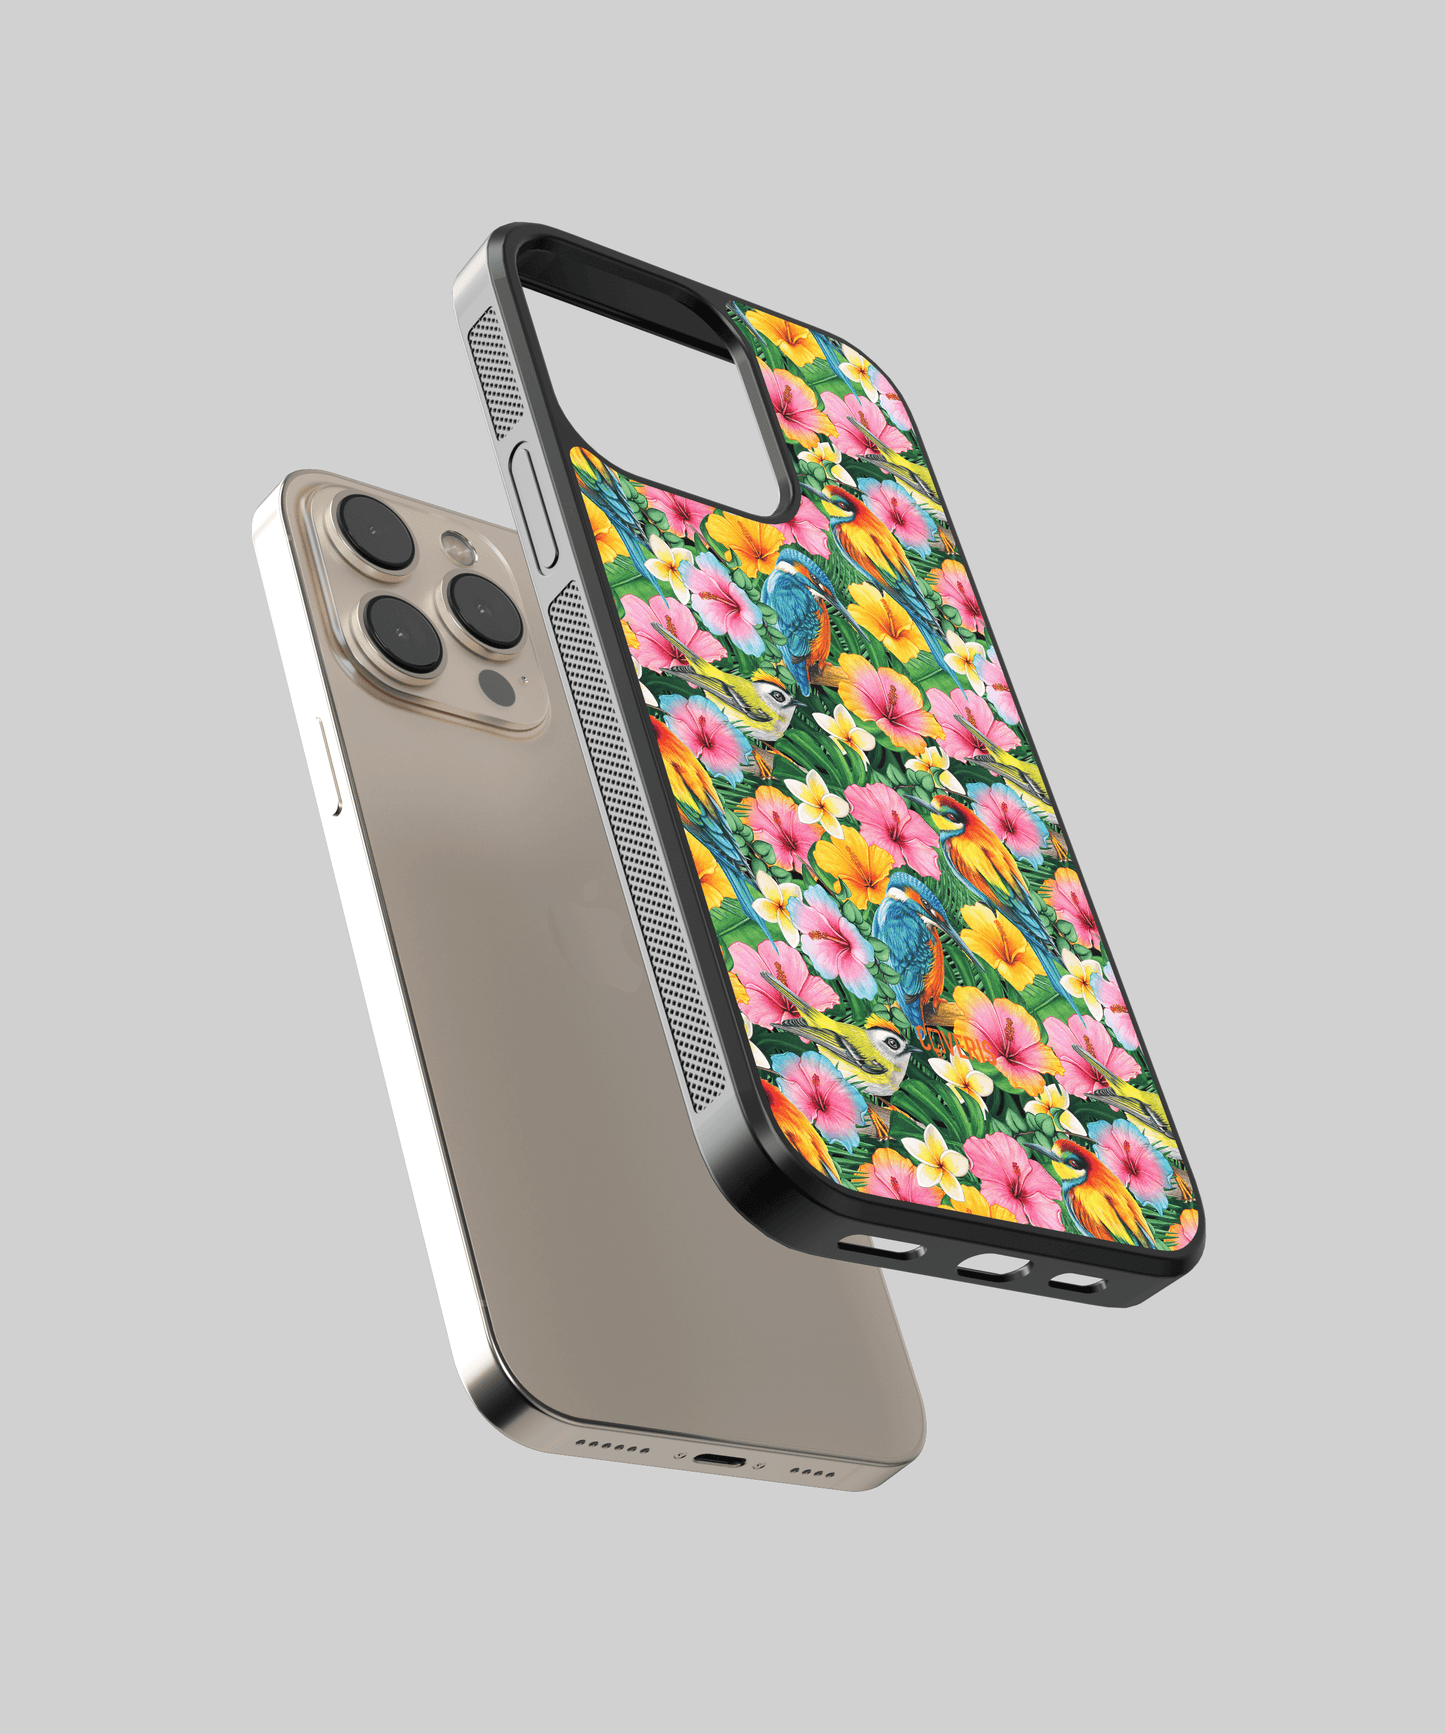 Islander - Google Pixel 2 XL phone case